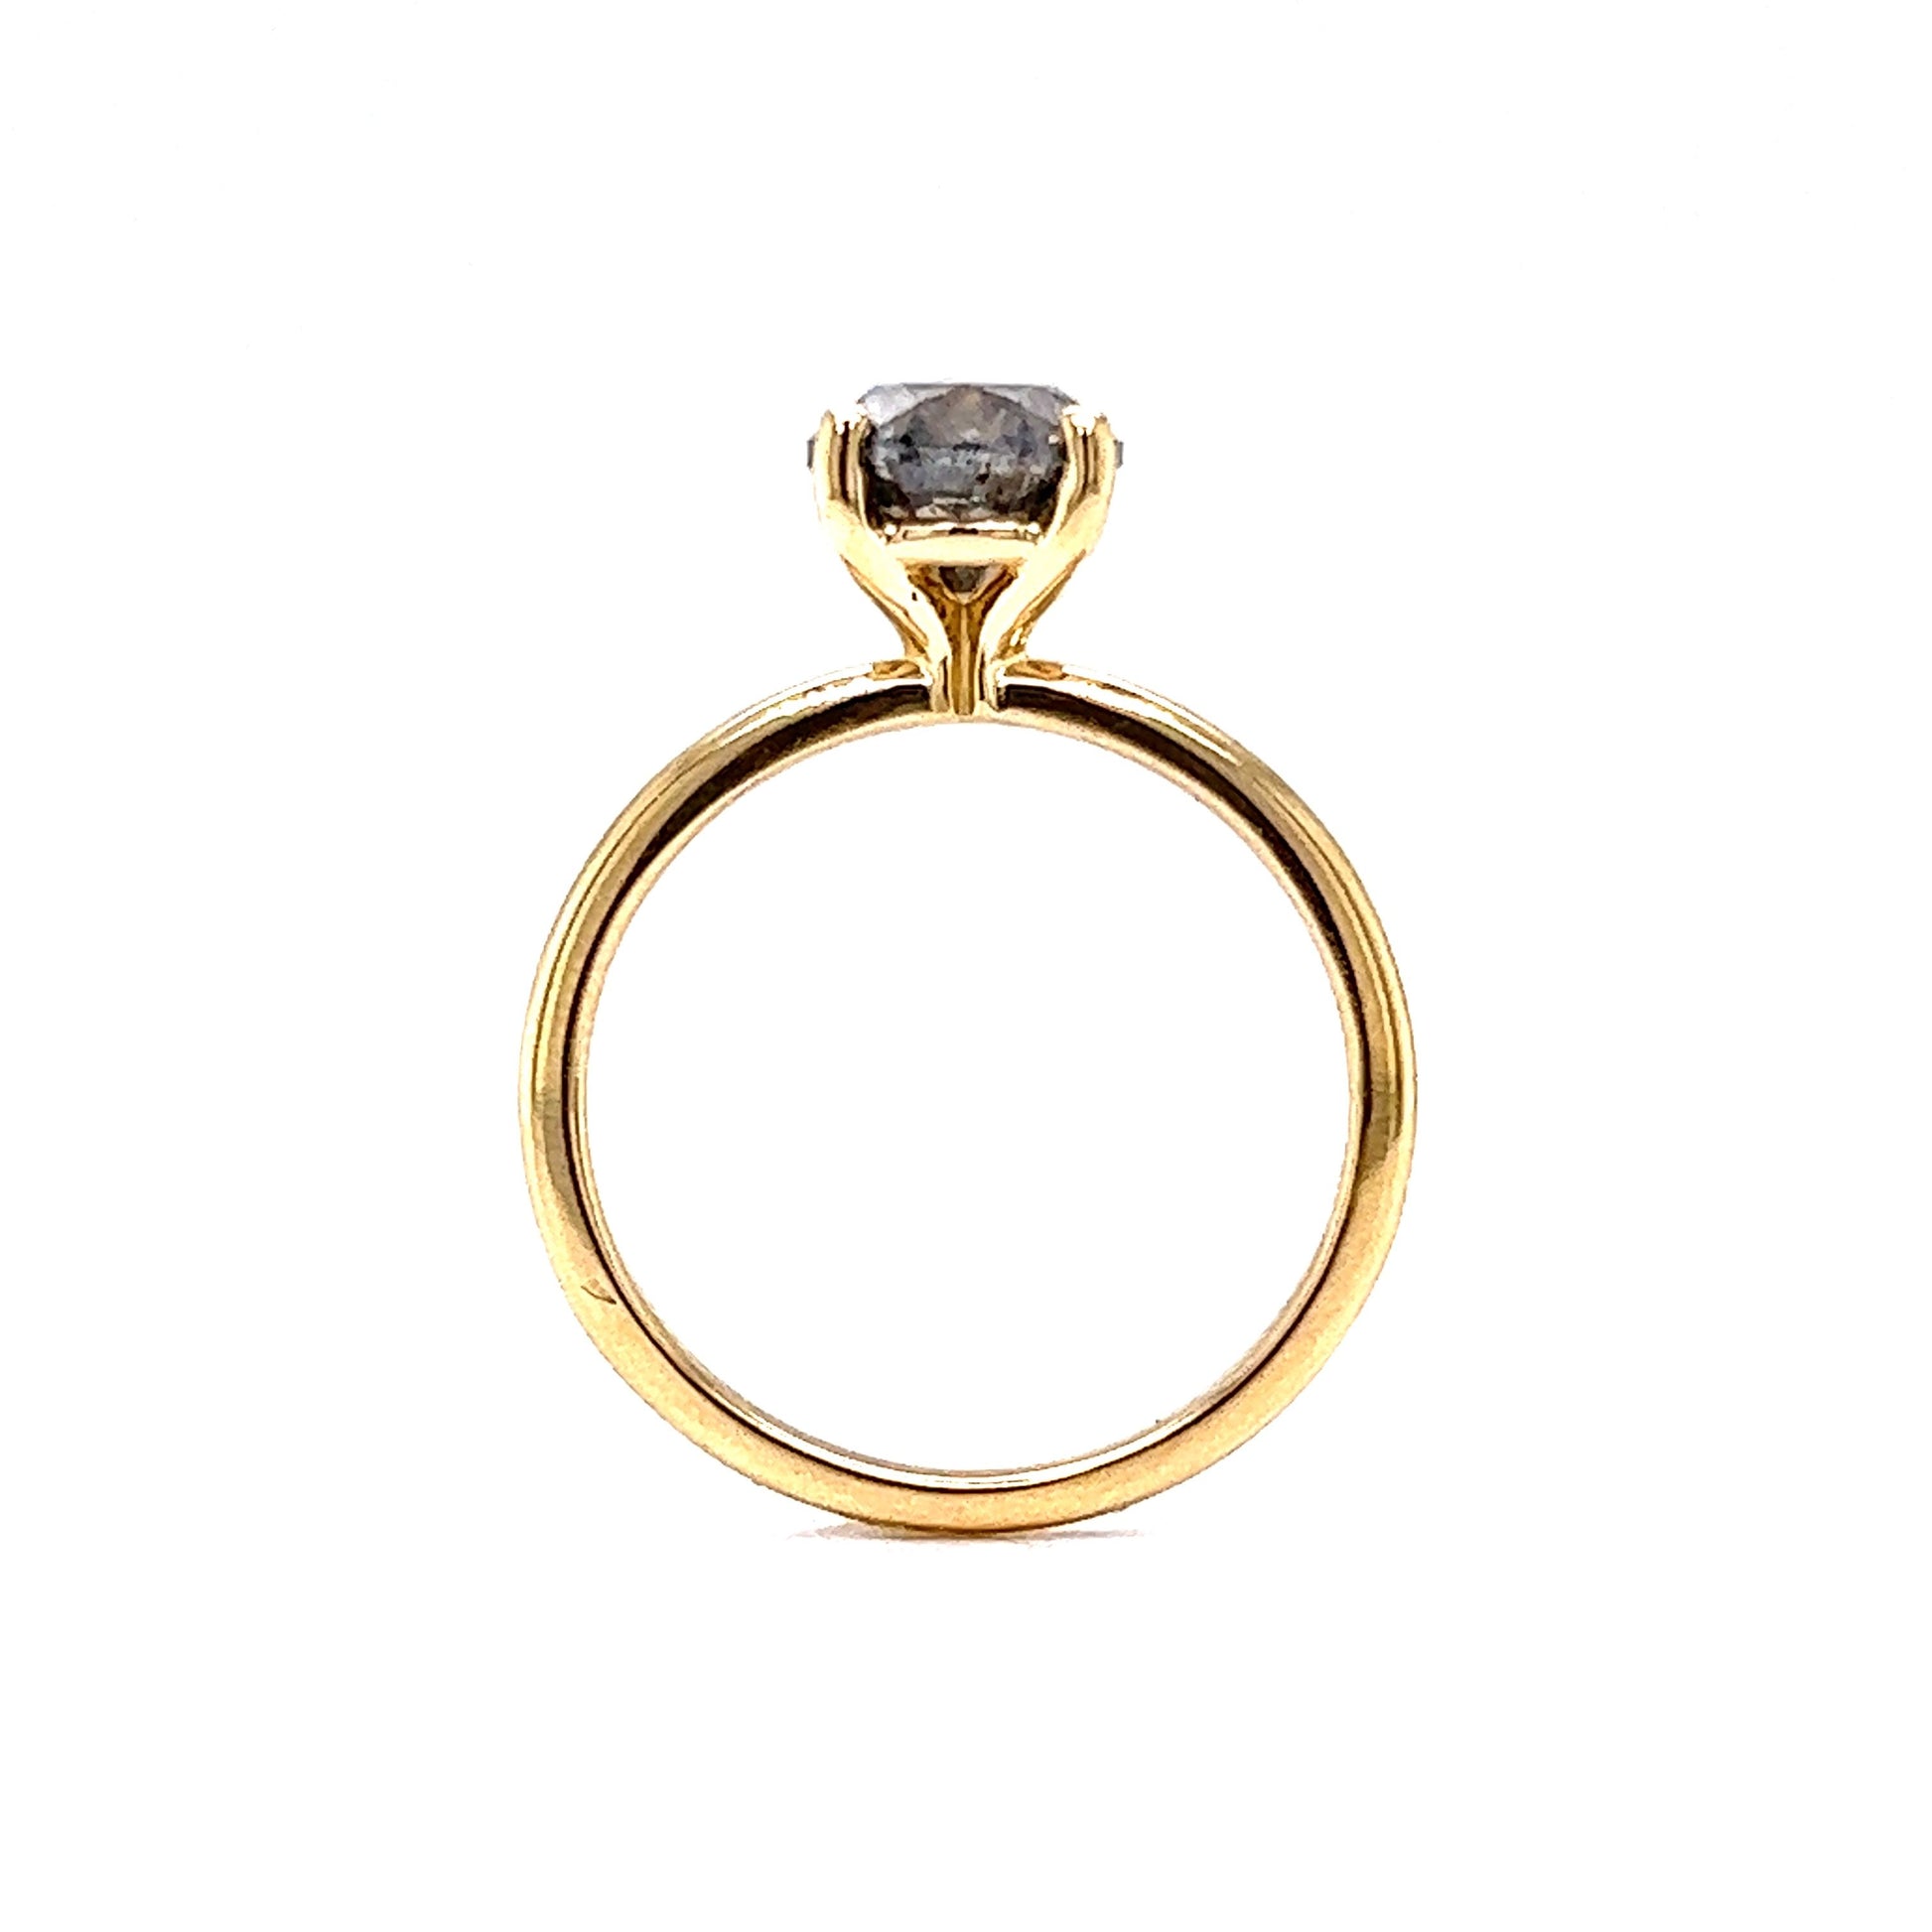 1.75 Salt & Pepper Diamond Engagement Ring in 14k Yellow GoldComposition: 14 Karat Yellow Gold Ring Size: 7.0 Total Diamond Weight: 1.75ct Total Gram Weight: 2.9 g Inscription: 14k
      